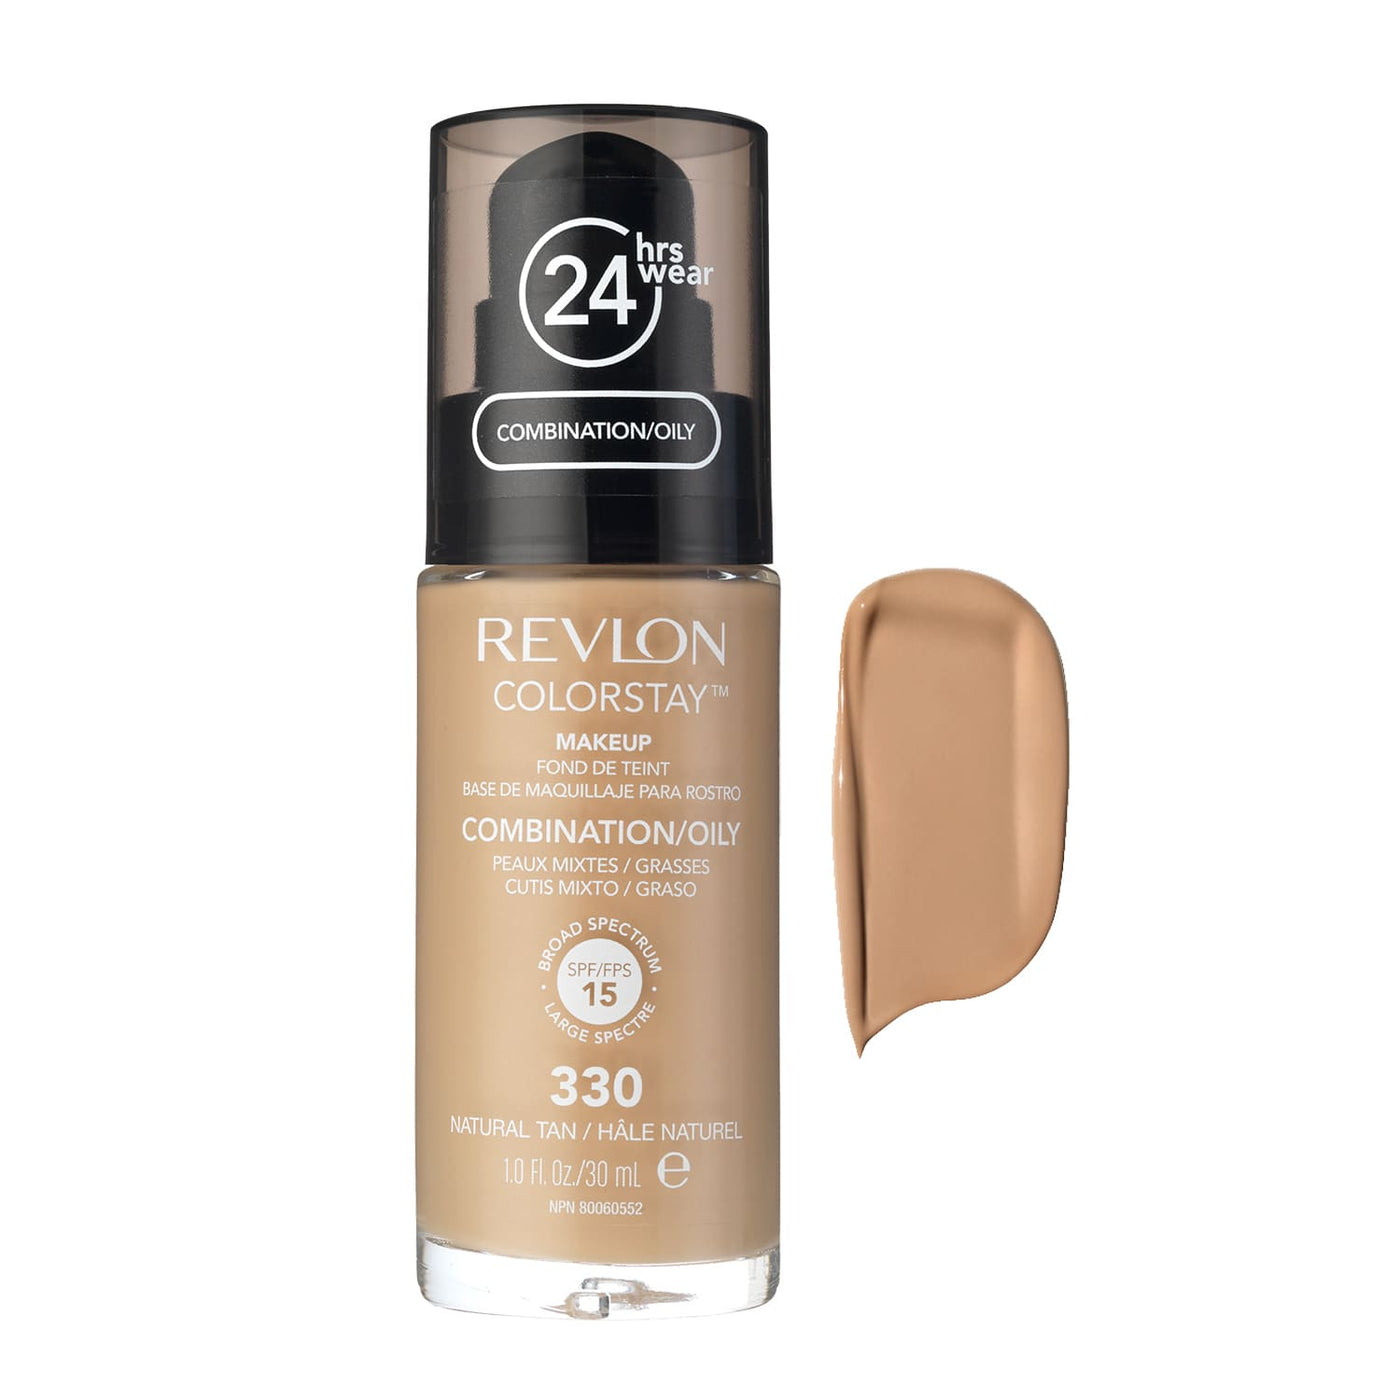 Revlon ColorStay™ Longwear Makeup for Combination/Oily Skin, SPF 15